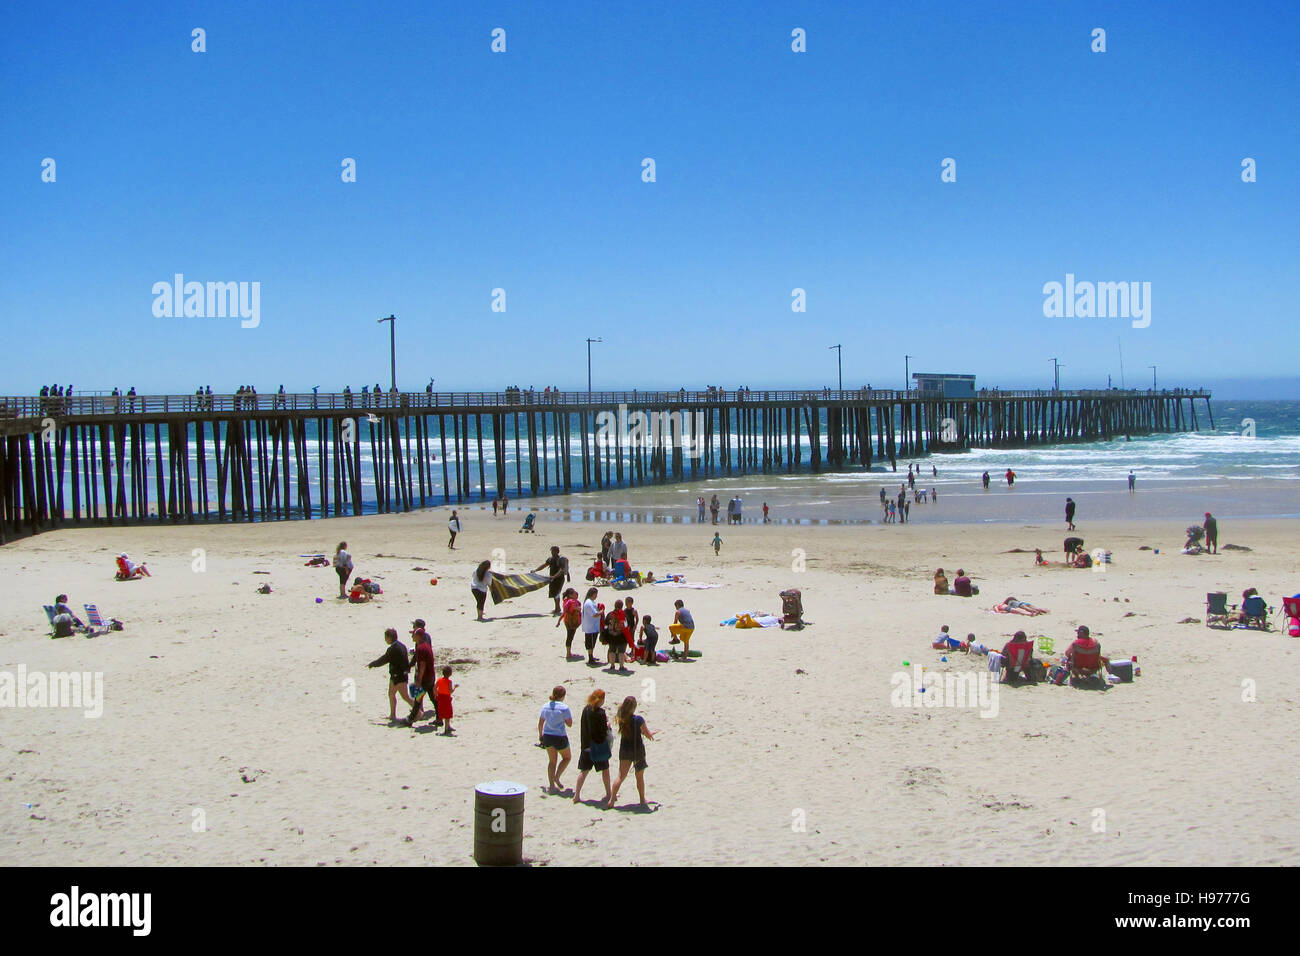 Pismo Beach, California, Stati Uniti d'America Foto Stock